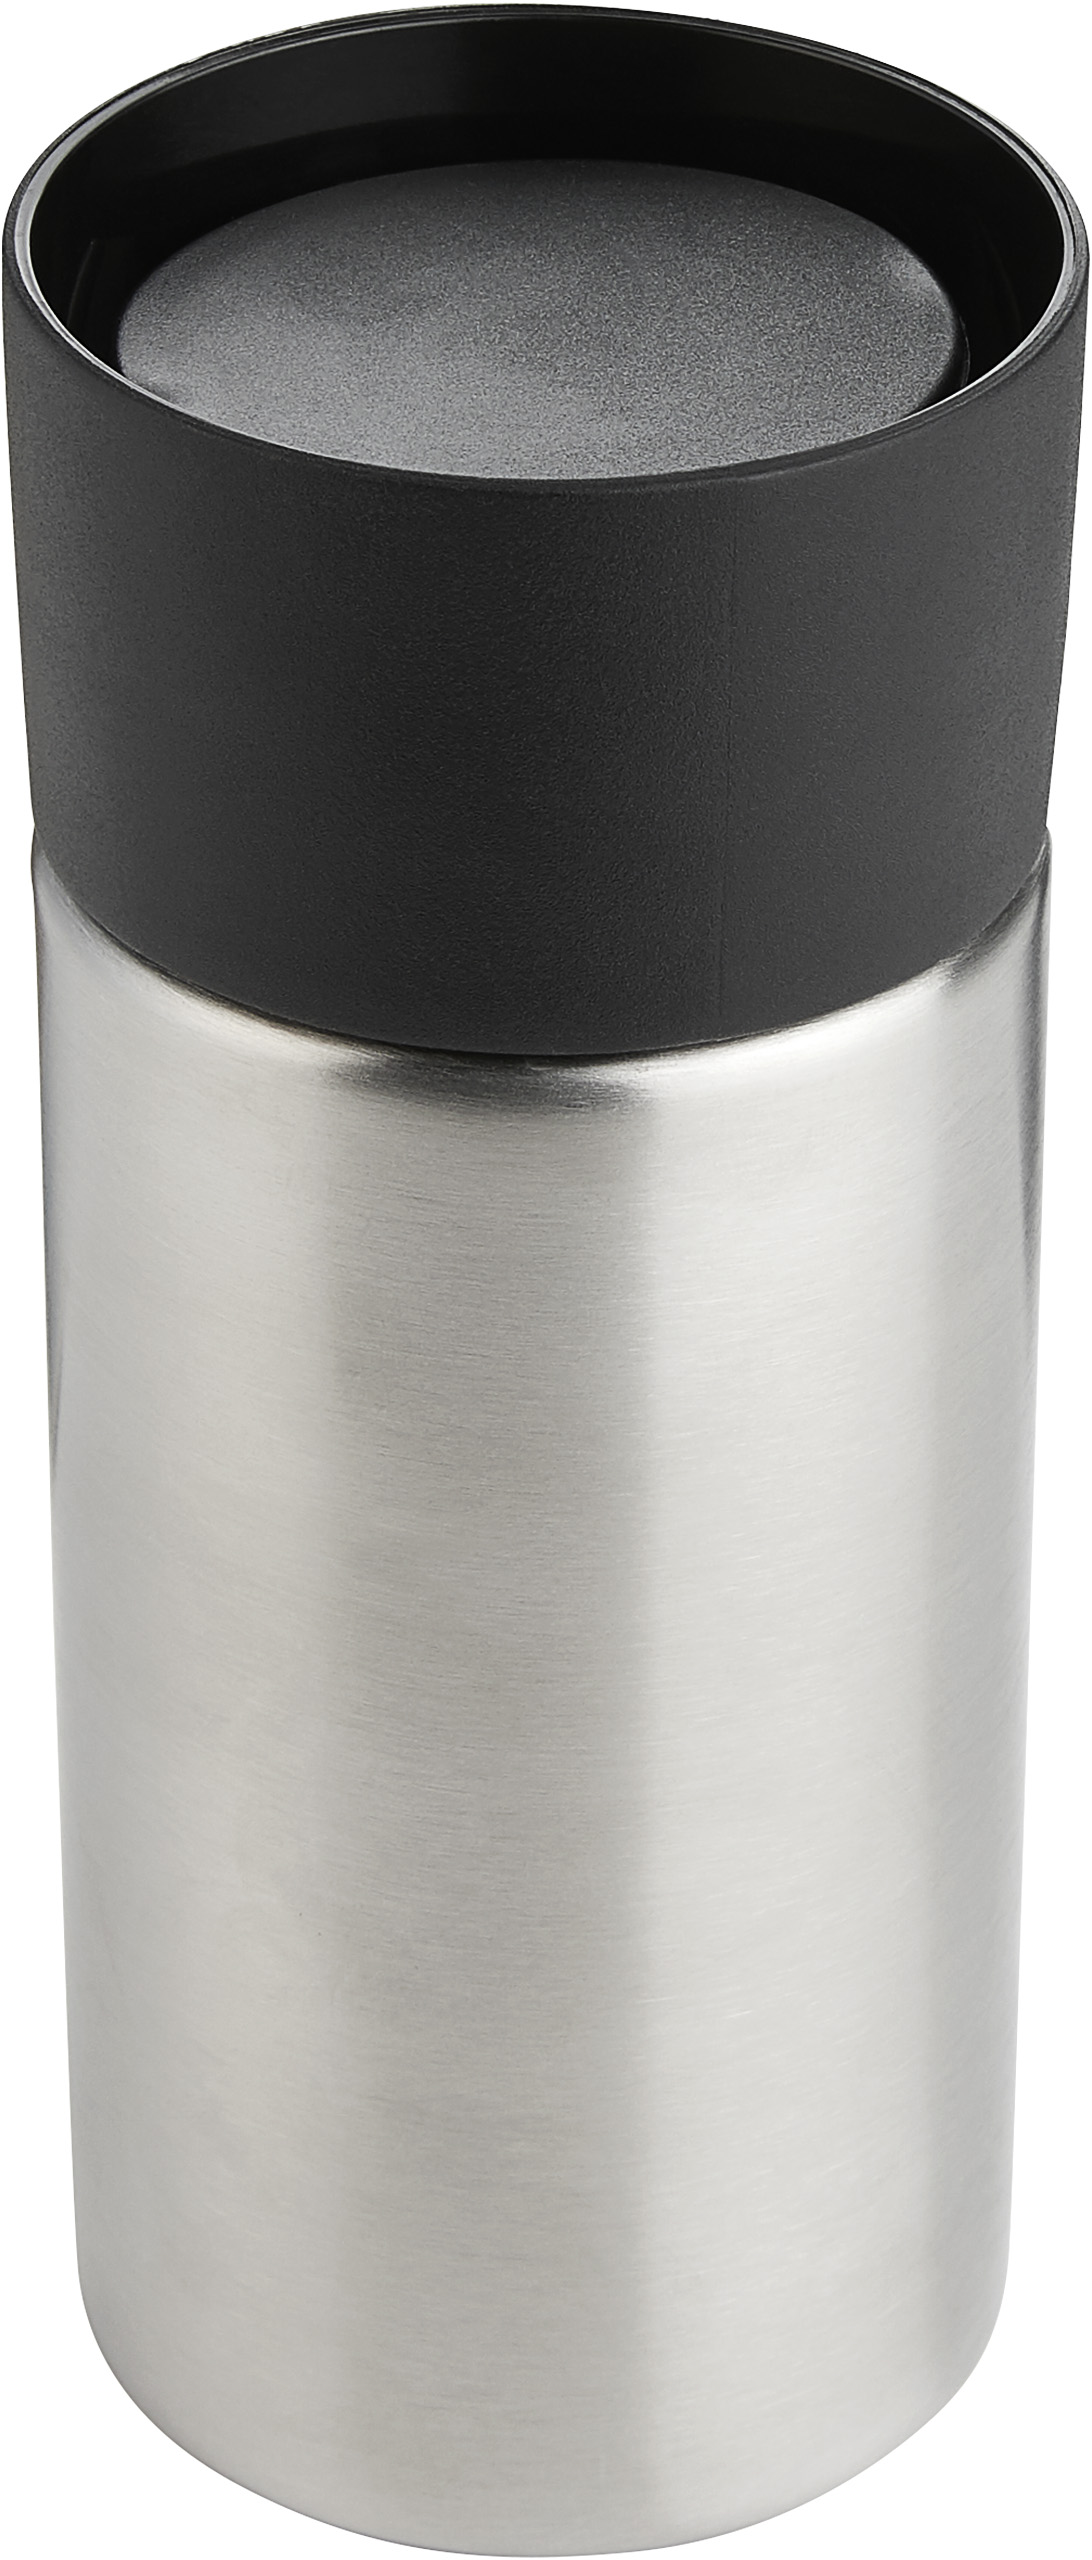 PUSH Thermo mug with pressure cap